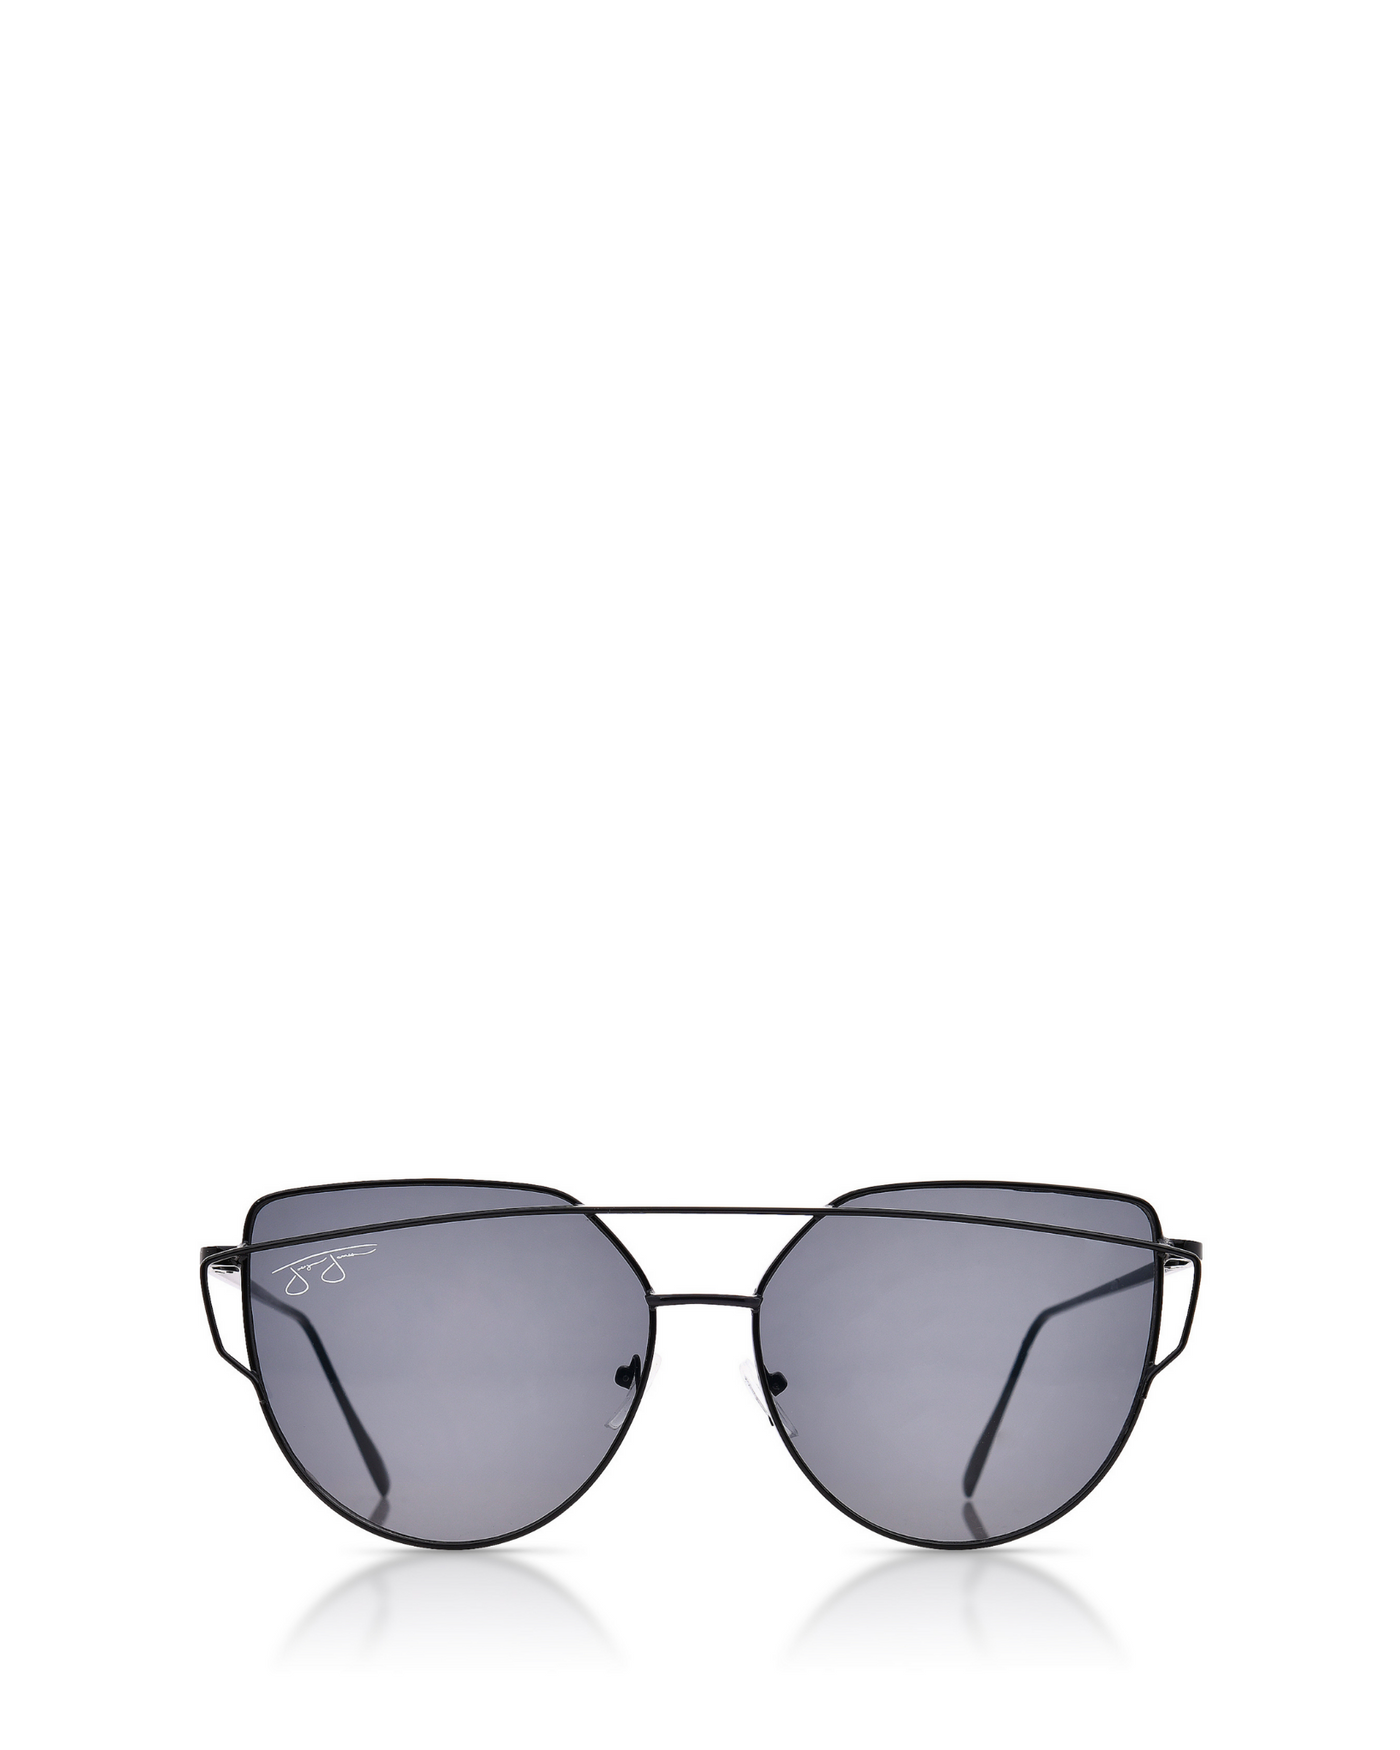 Oversized Aviator Sunglasses - Black Metal Frame with Black Lens Sunglasses Joey James, The Label   